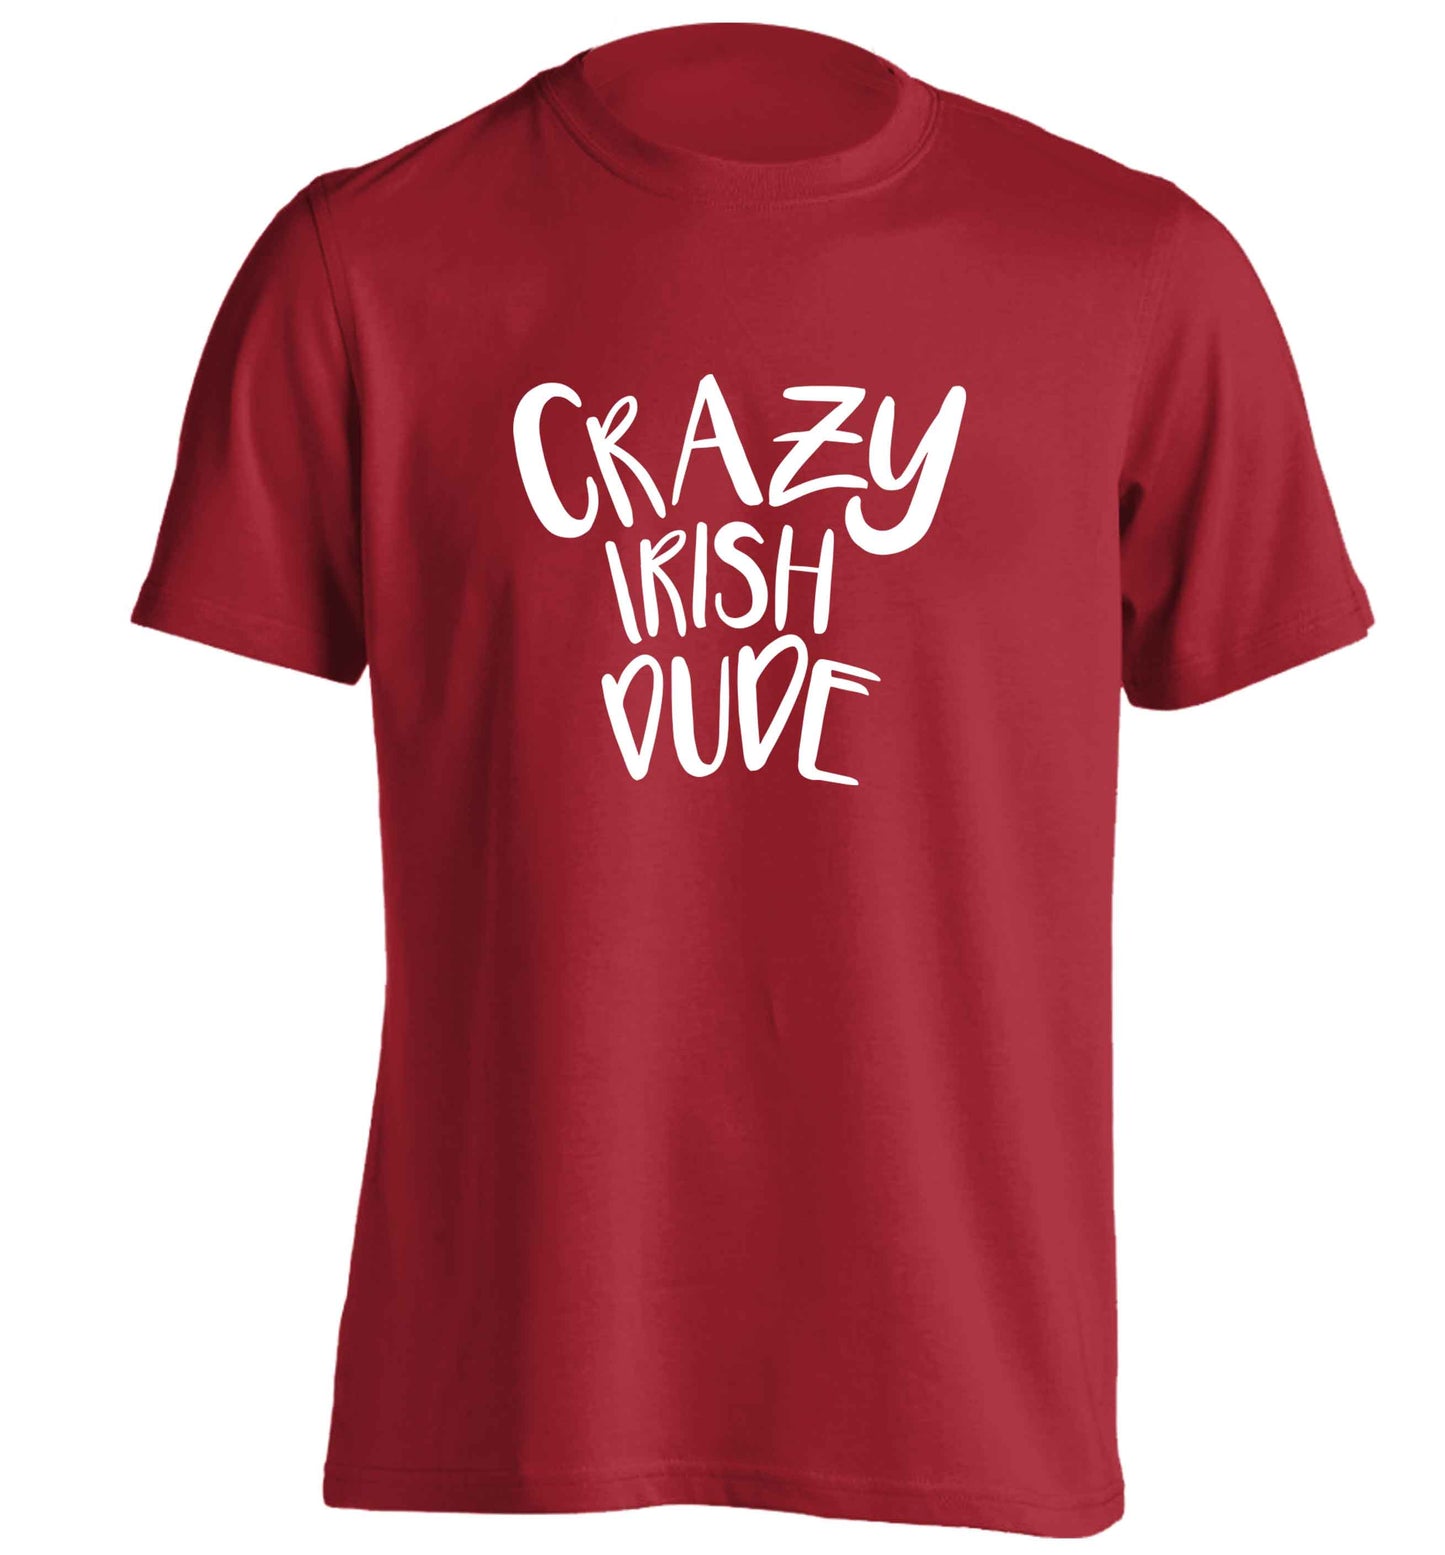 Crazy Irish dude adults unisex red Tshirt 2XL